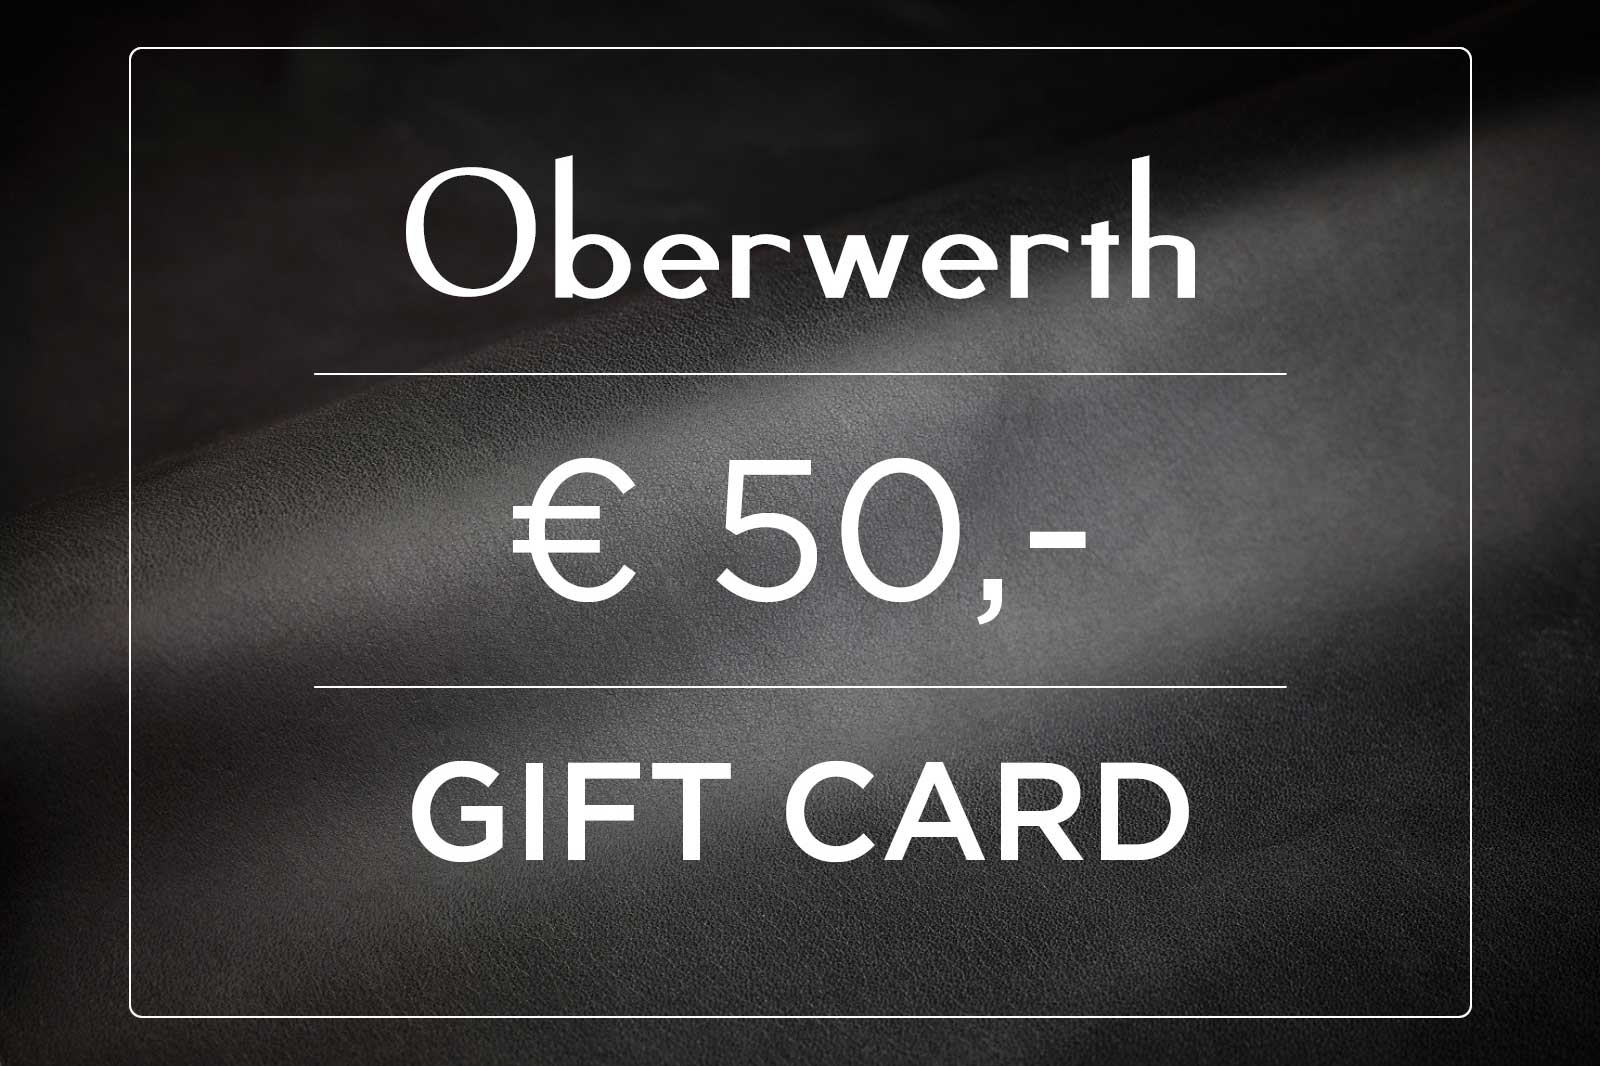 Oberwerth gift card 50€ - 2000€